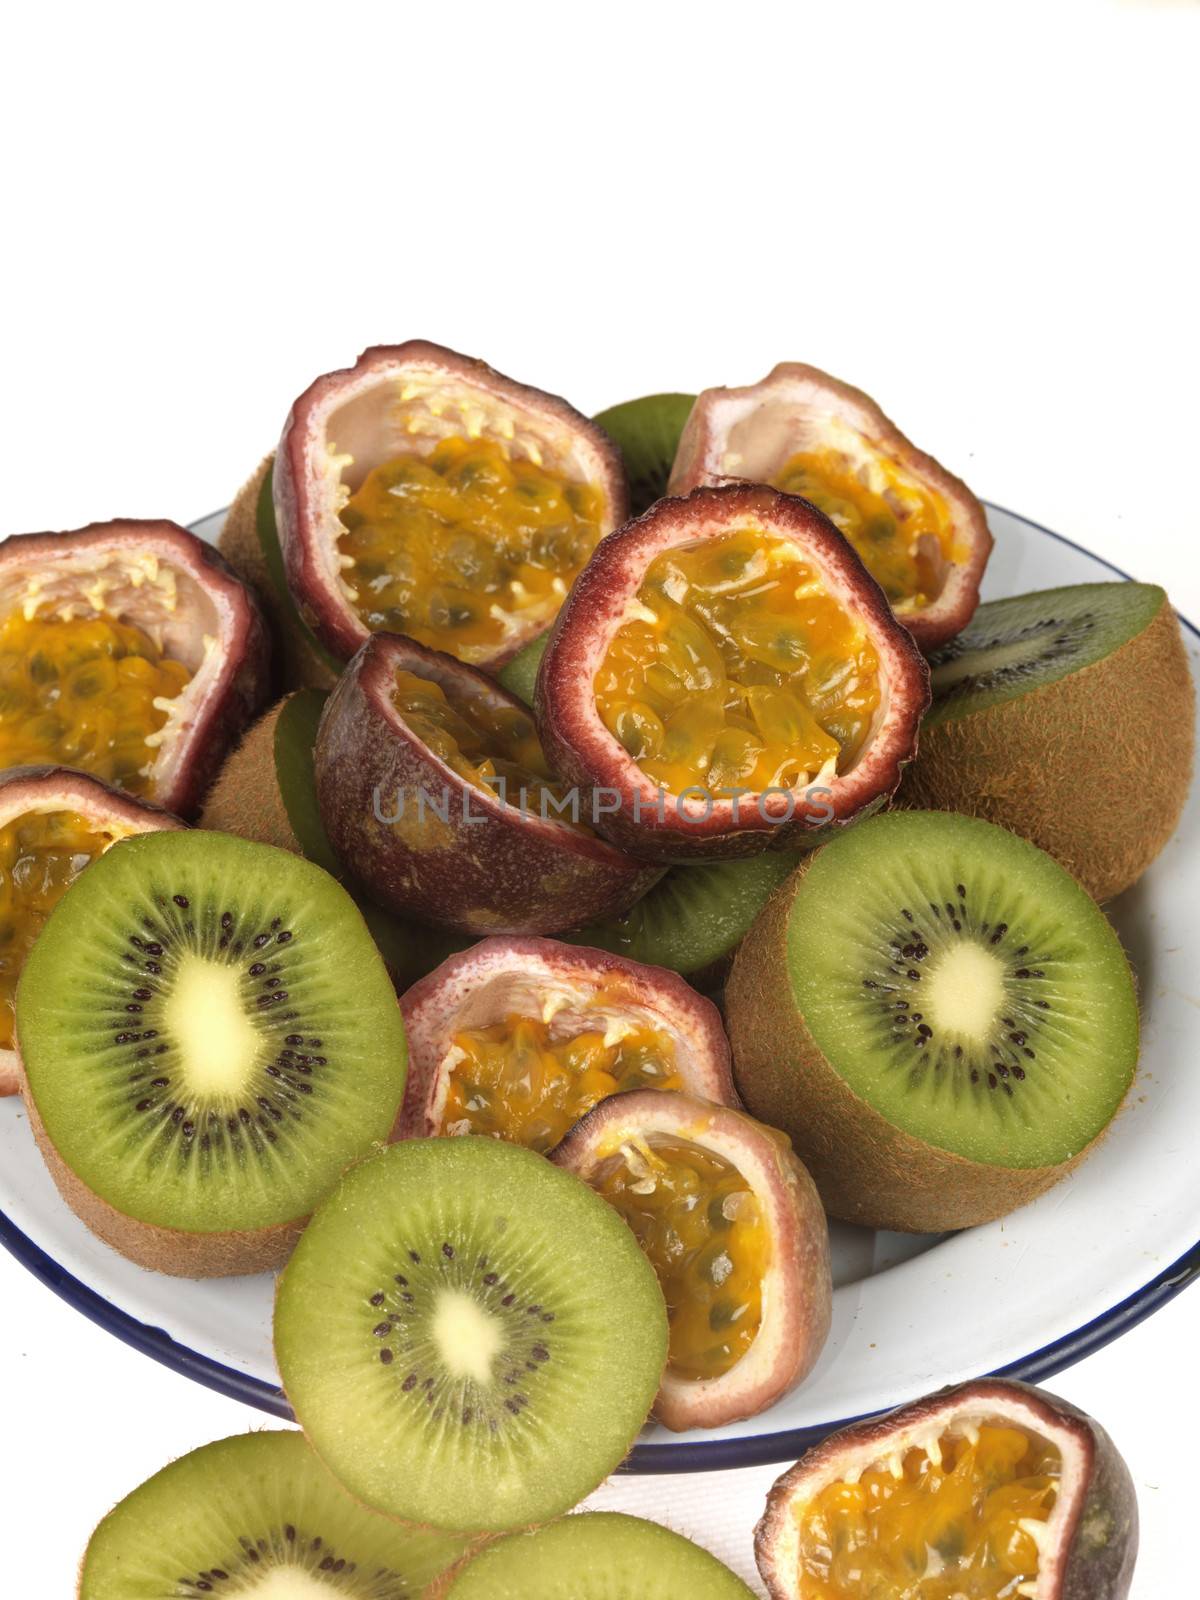 Kiwi and Passion Fruits by Whiteboxmedia